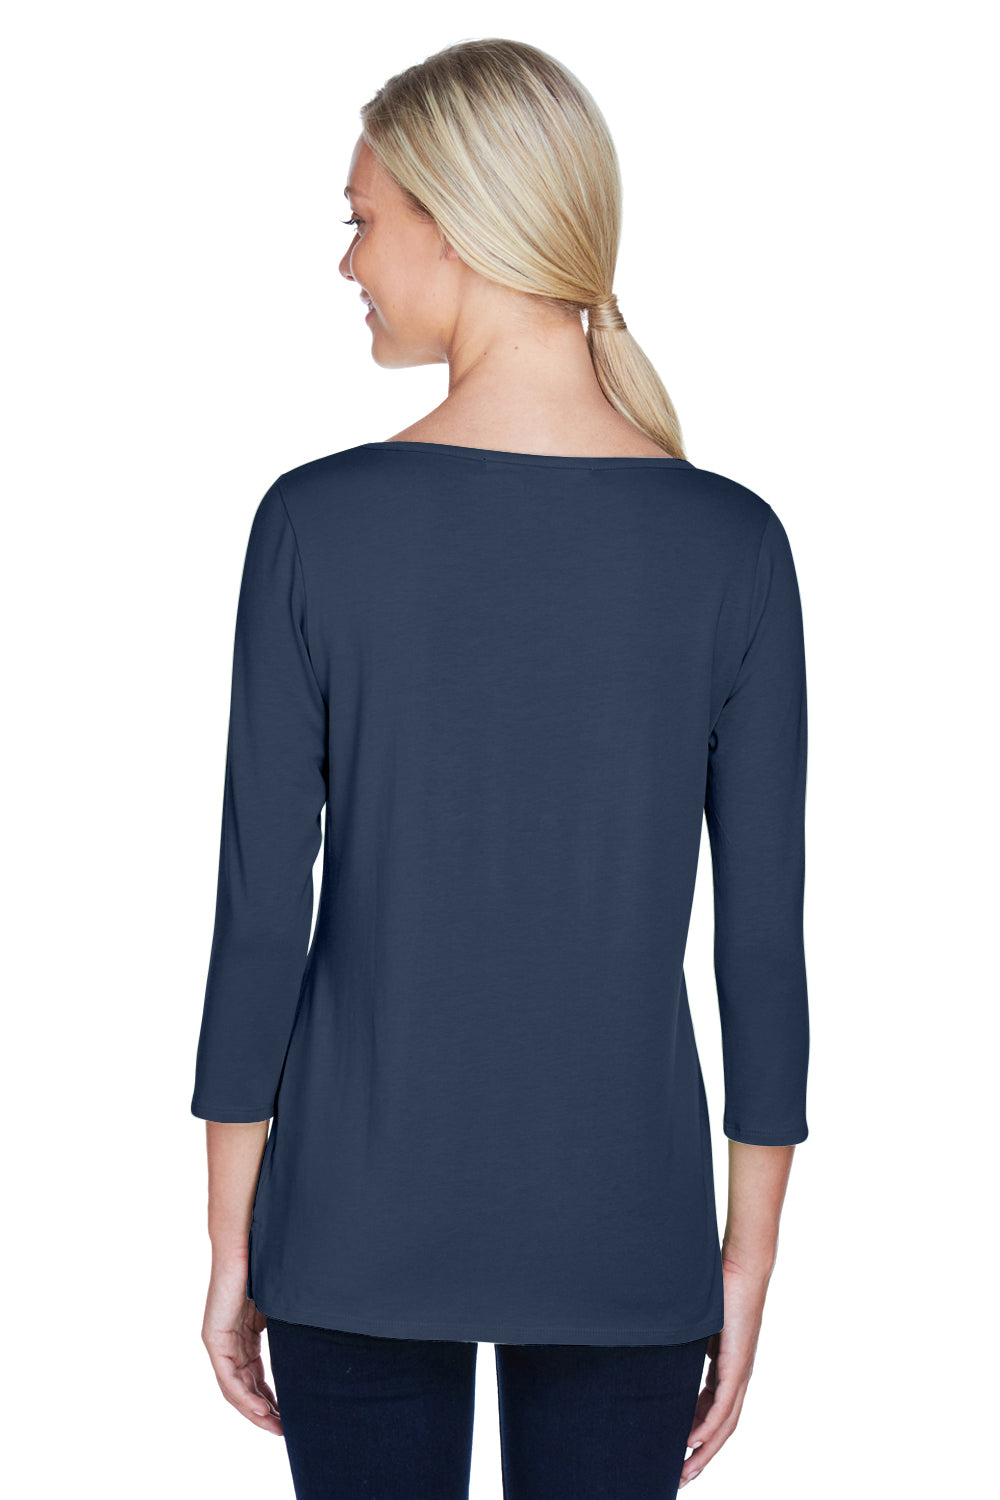 Devon & Jones DP192W Womens Perfect Fit 3/4 Sleeve Wide Neck T-Shirt Navy Blue Back